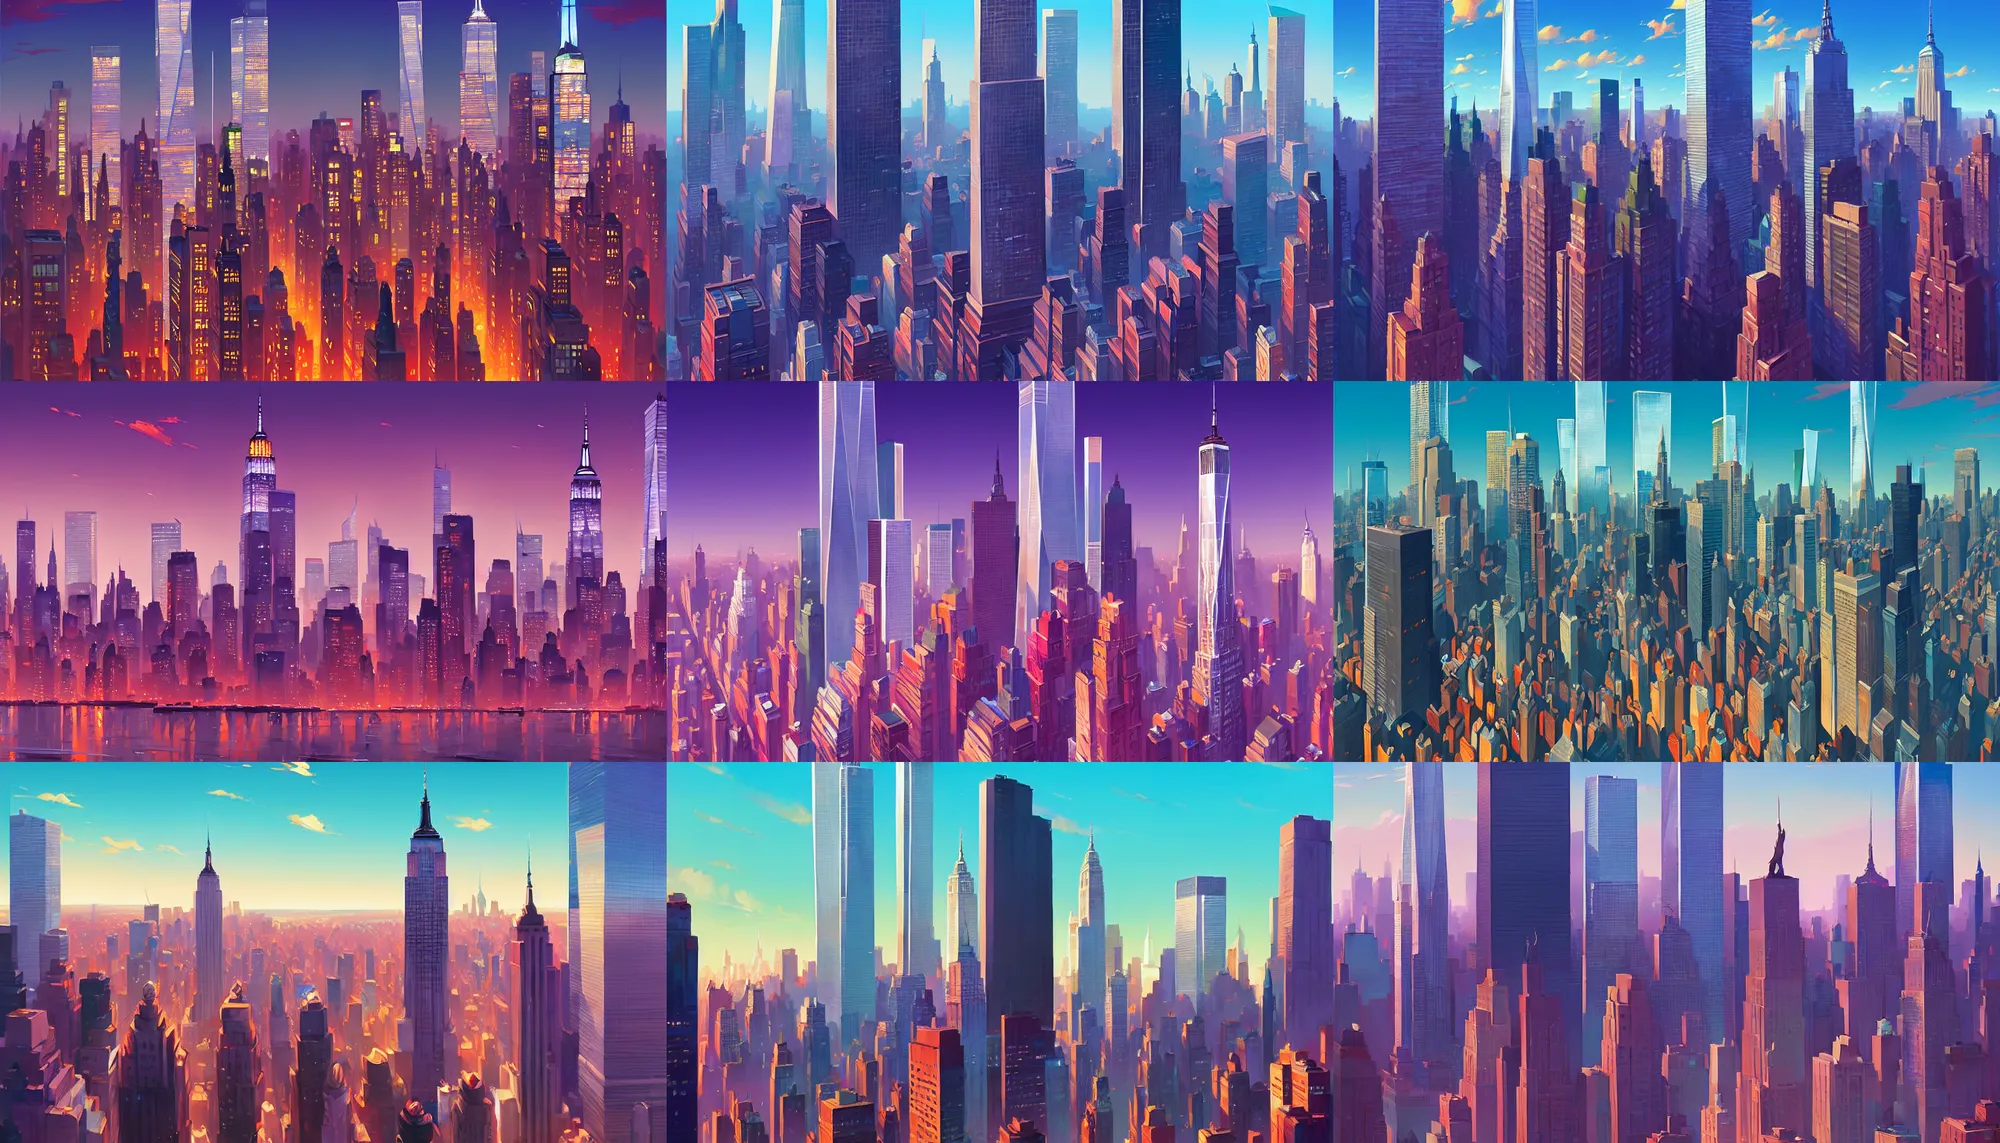 Prompt: new - york skyline, behance hd by jesper ejsing, by rhads, makoto shinkai and lois van baarle, ilya kuvshinov, rossdraws global illumination